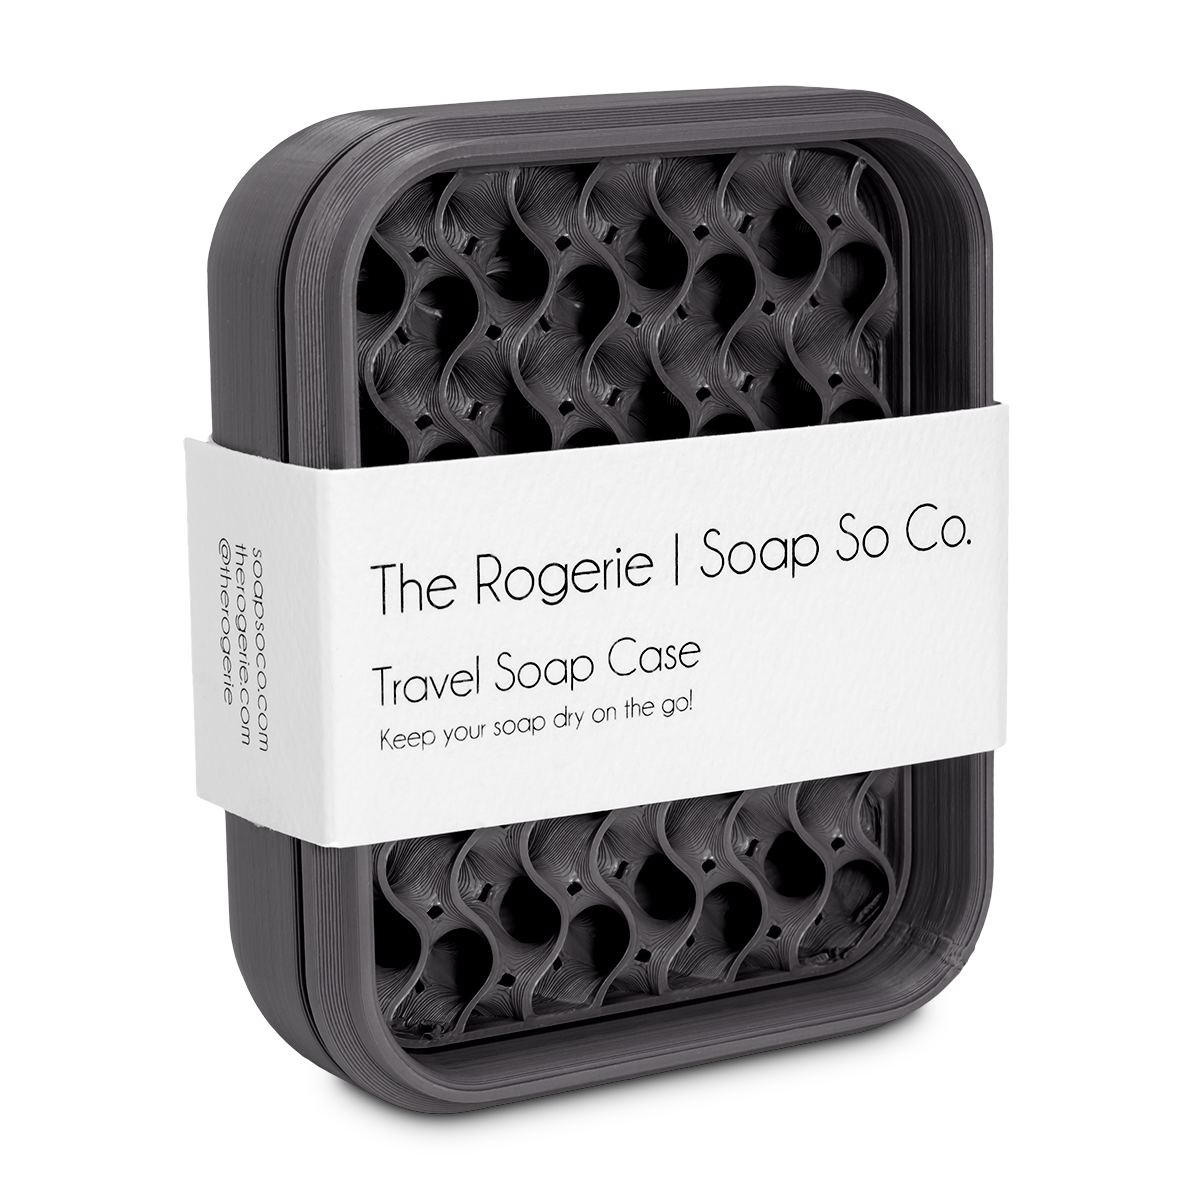 TRAVEL SOAP CASE - Soap So Co.